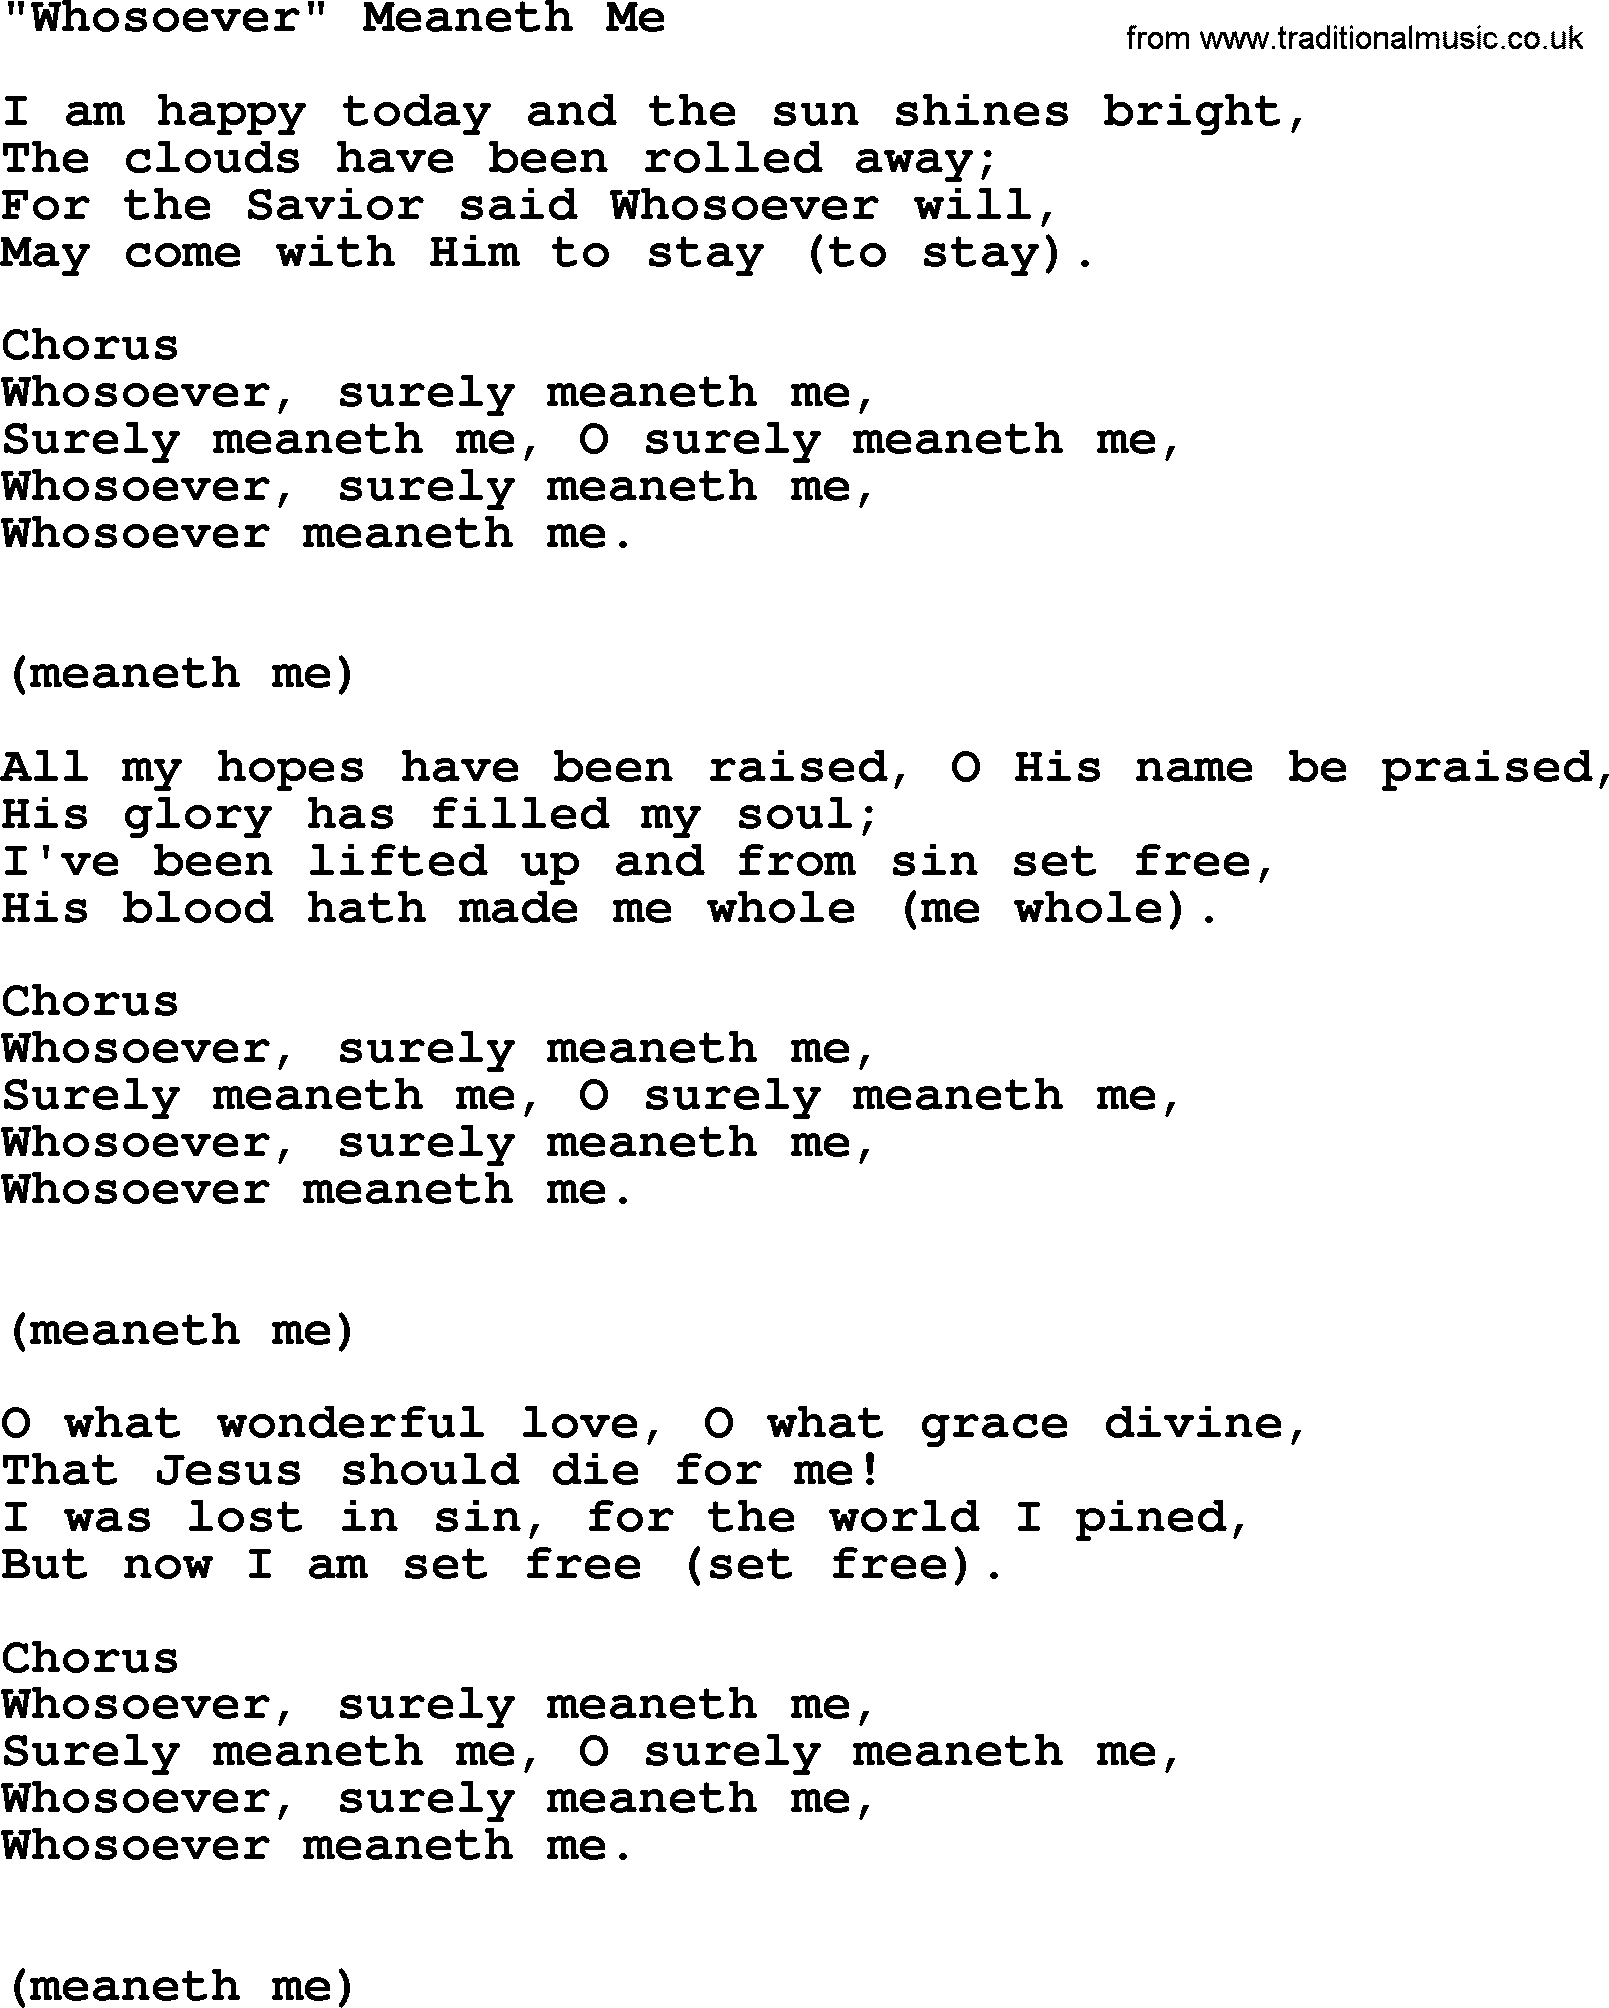 Baptist Hymnal Hymn: Whosoever Meaneth Me, lyrics with pdf